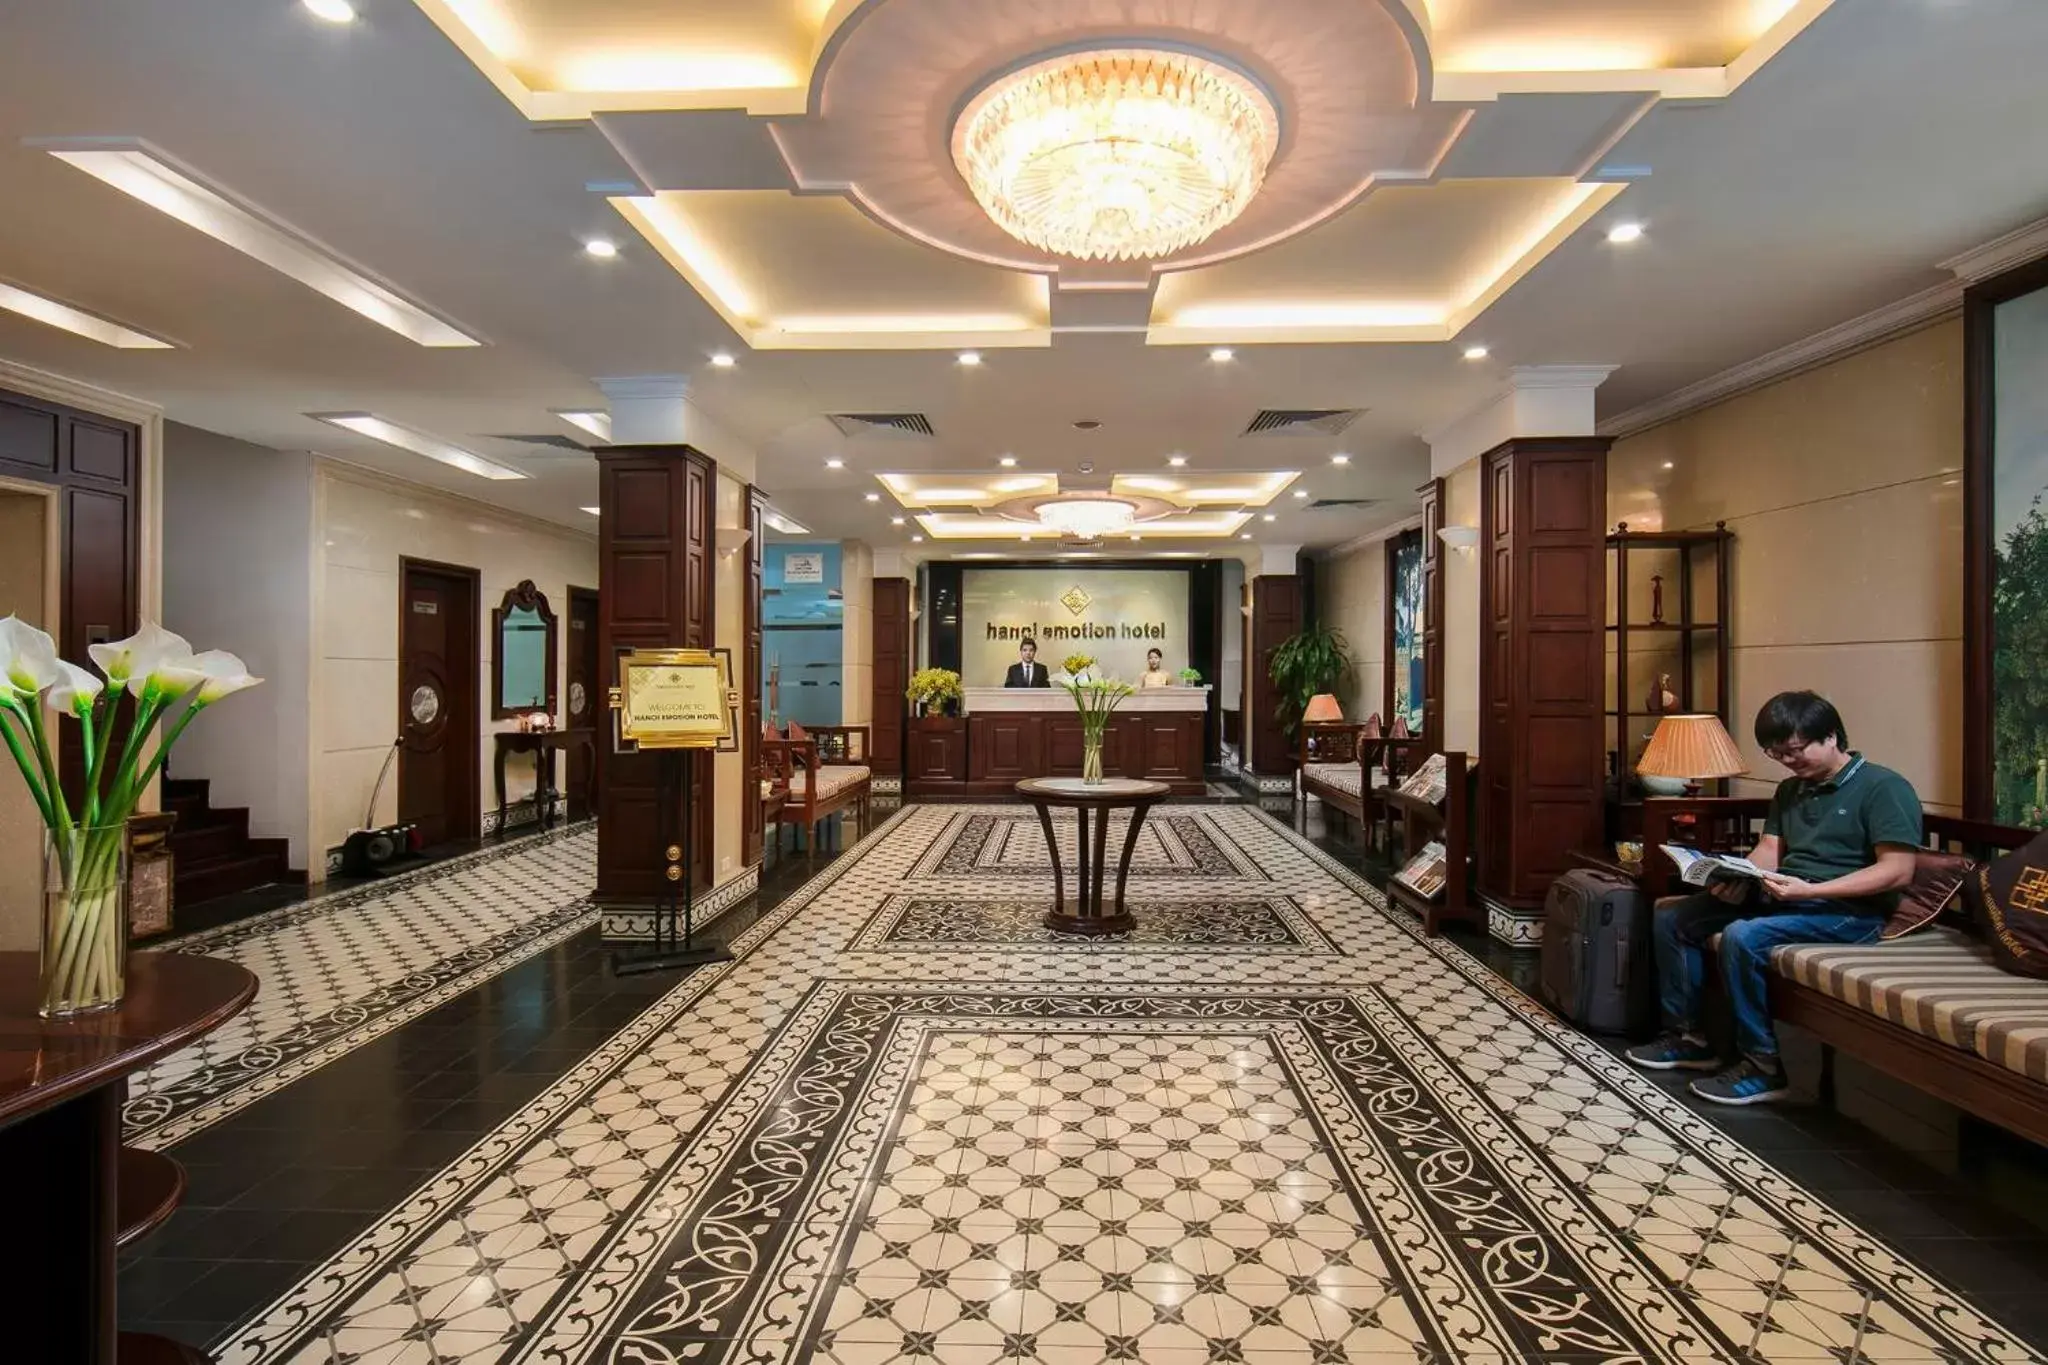 Lobby or reception in Hanoi Emotion Hotel